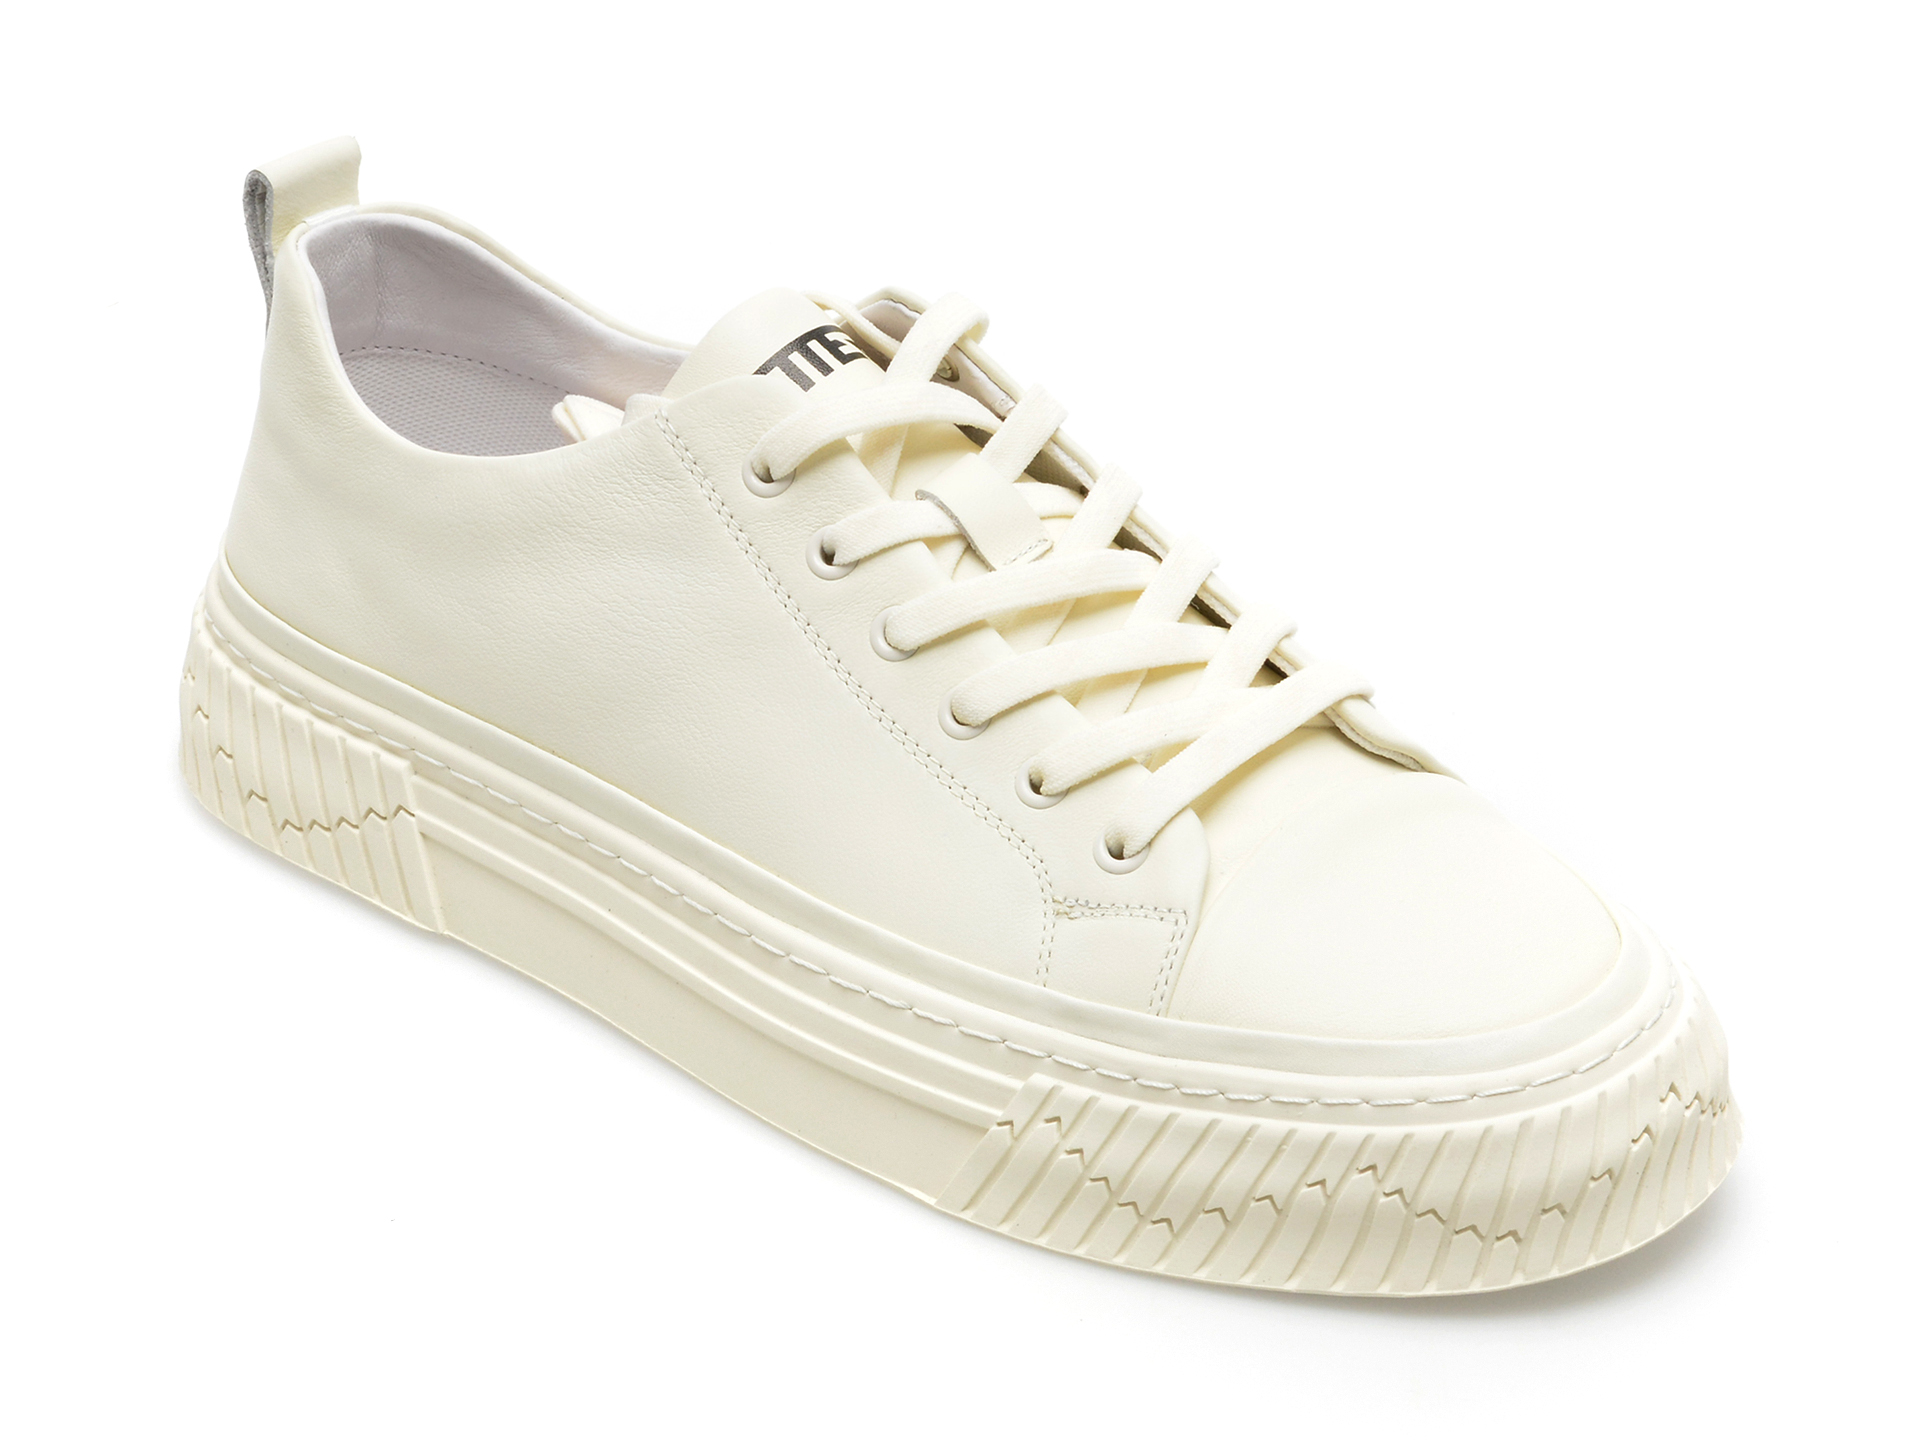 Pantofi sport OTTER albi, F035, din piele naturala /barbati/pantofi